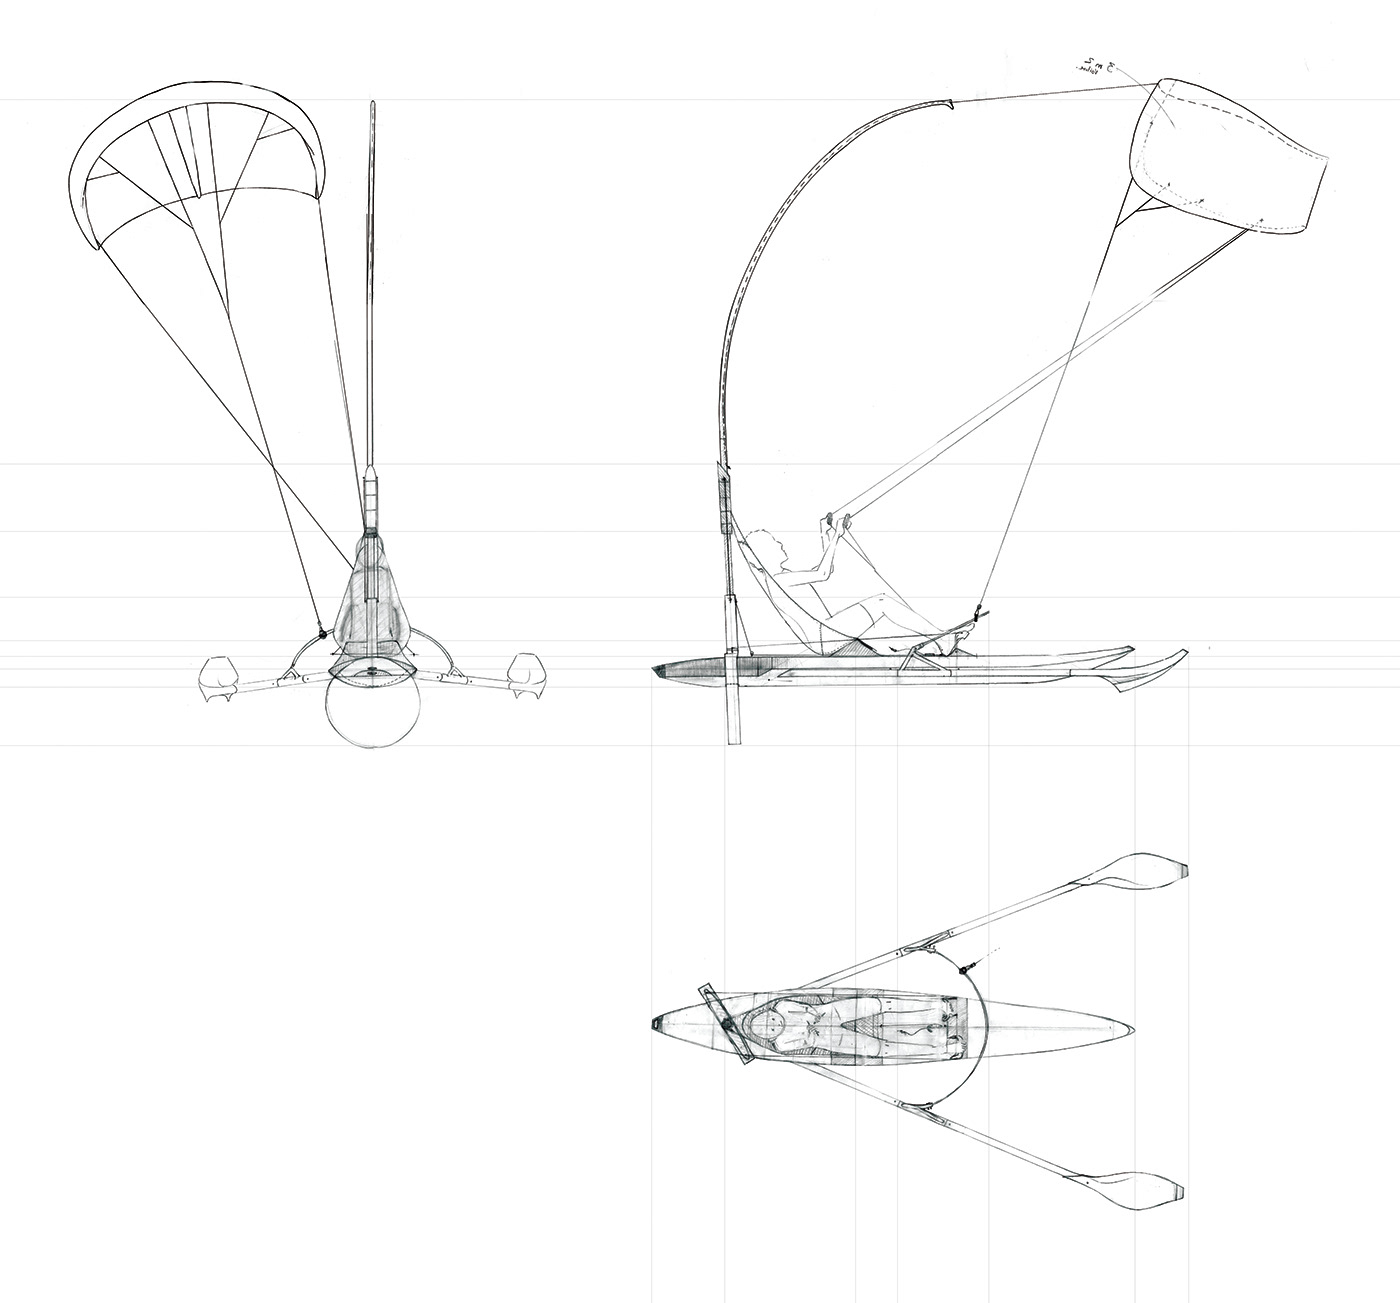 boat foil sailing design product aerodynamic wind technical sea architecture